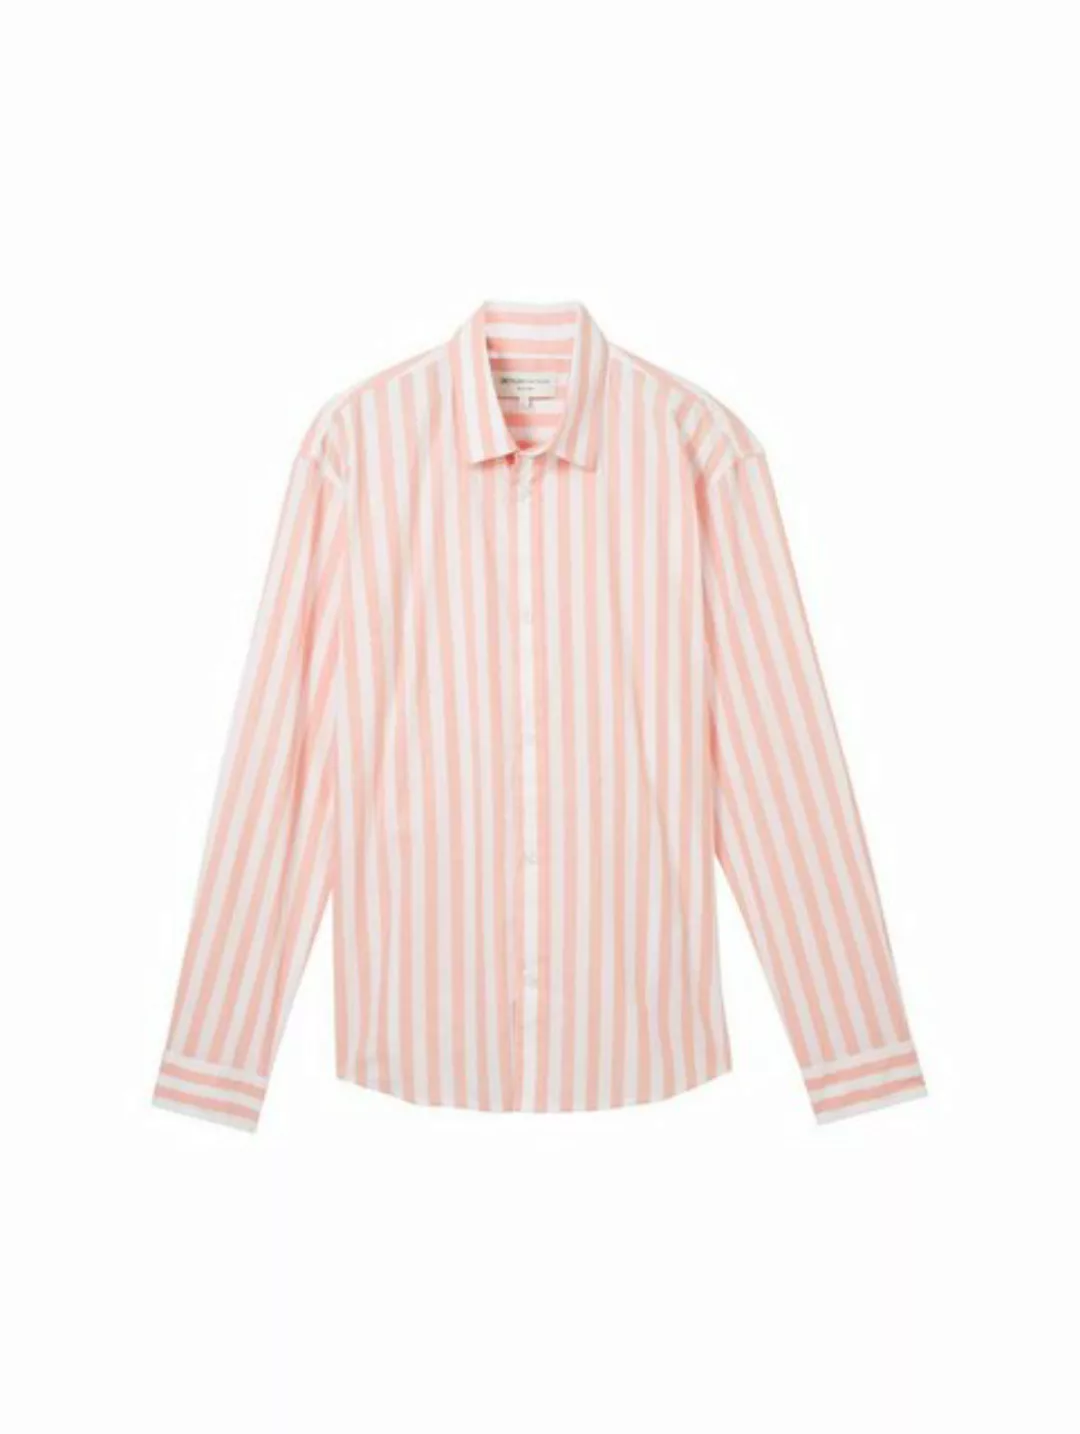 TOM TAILOR Denim T-Shirt relaxed striped shirt günstig online kaufen